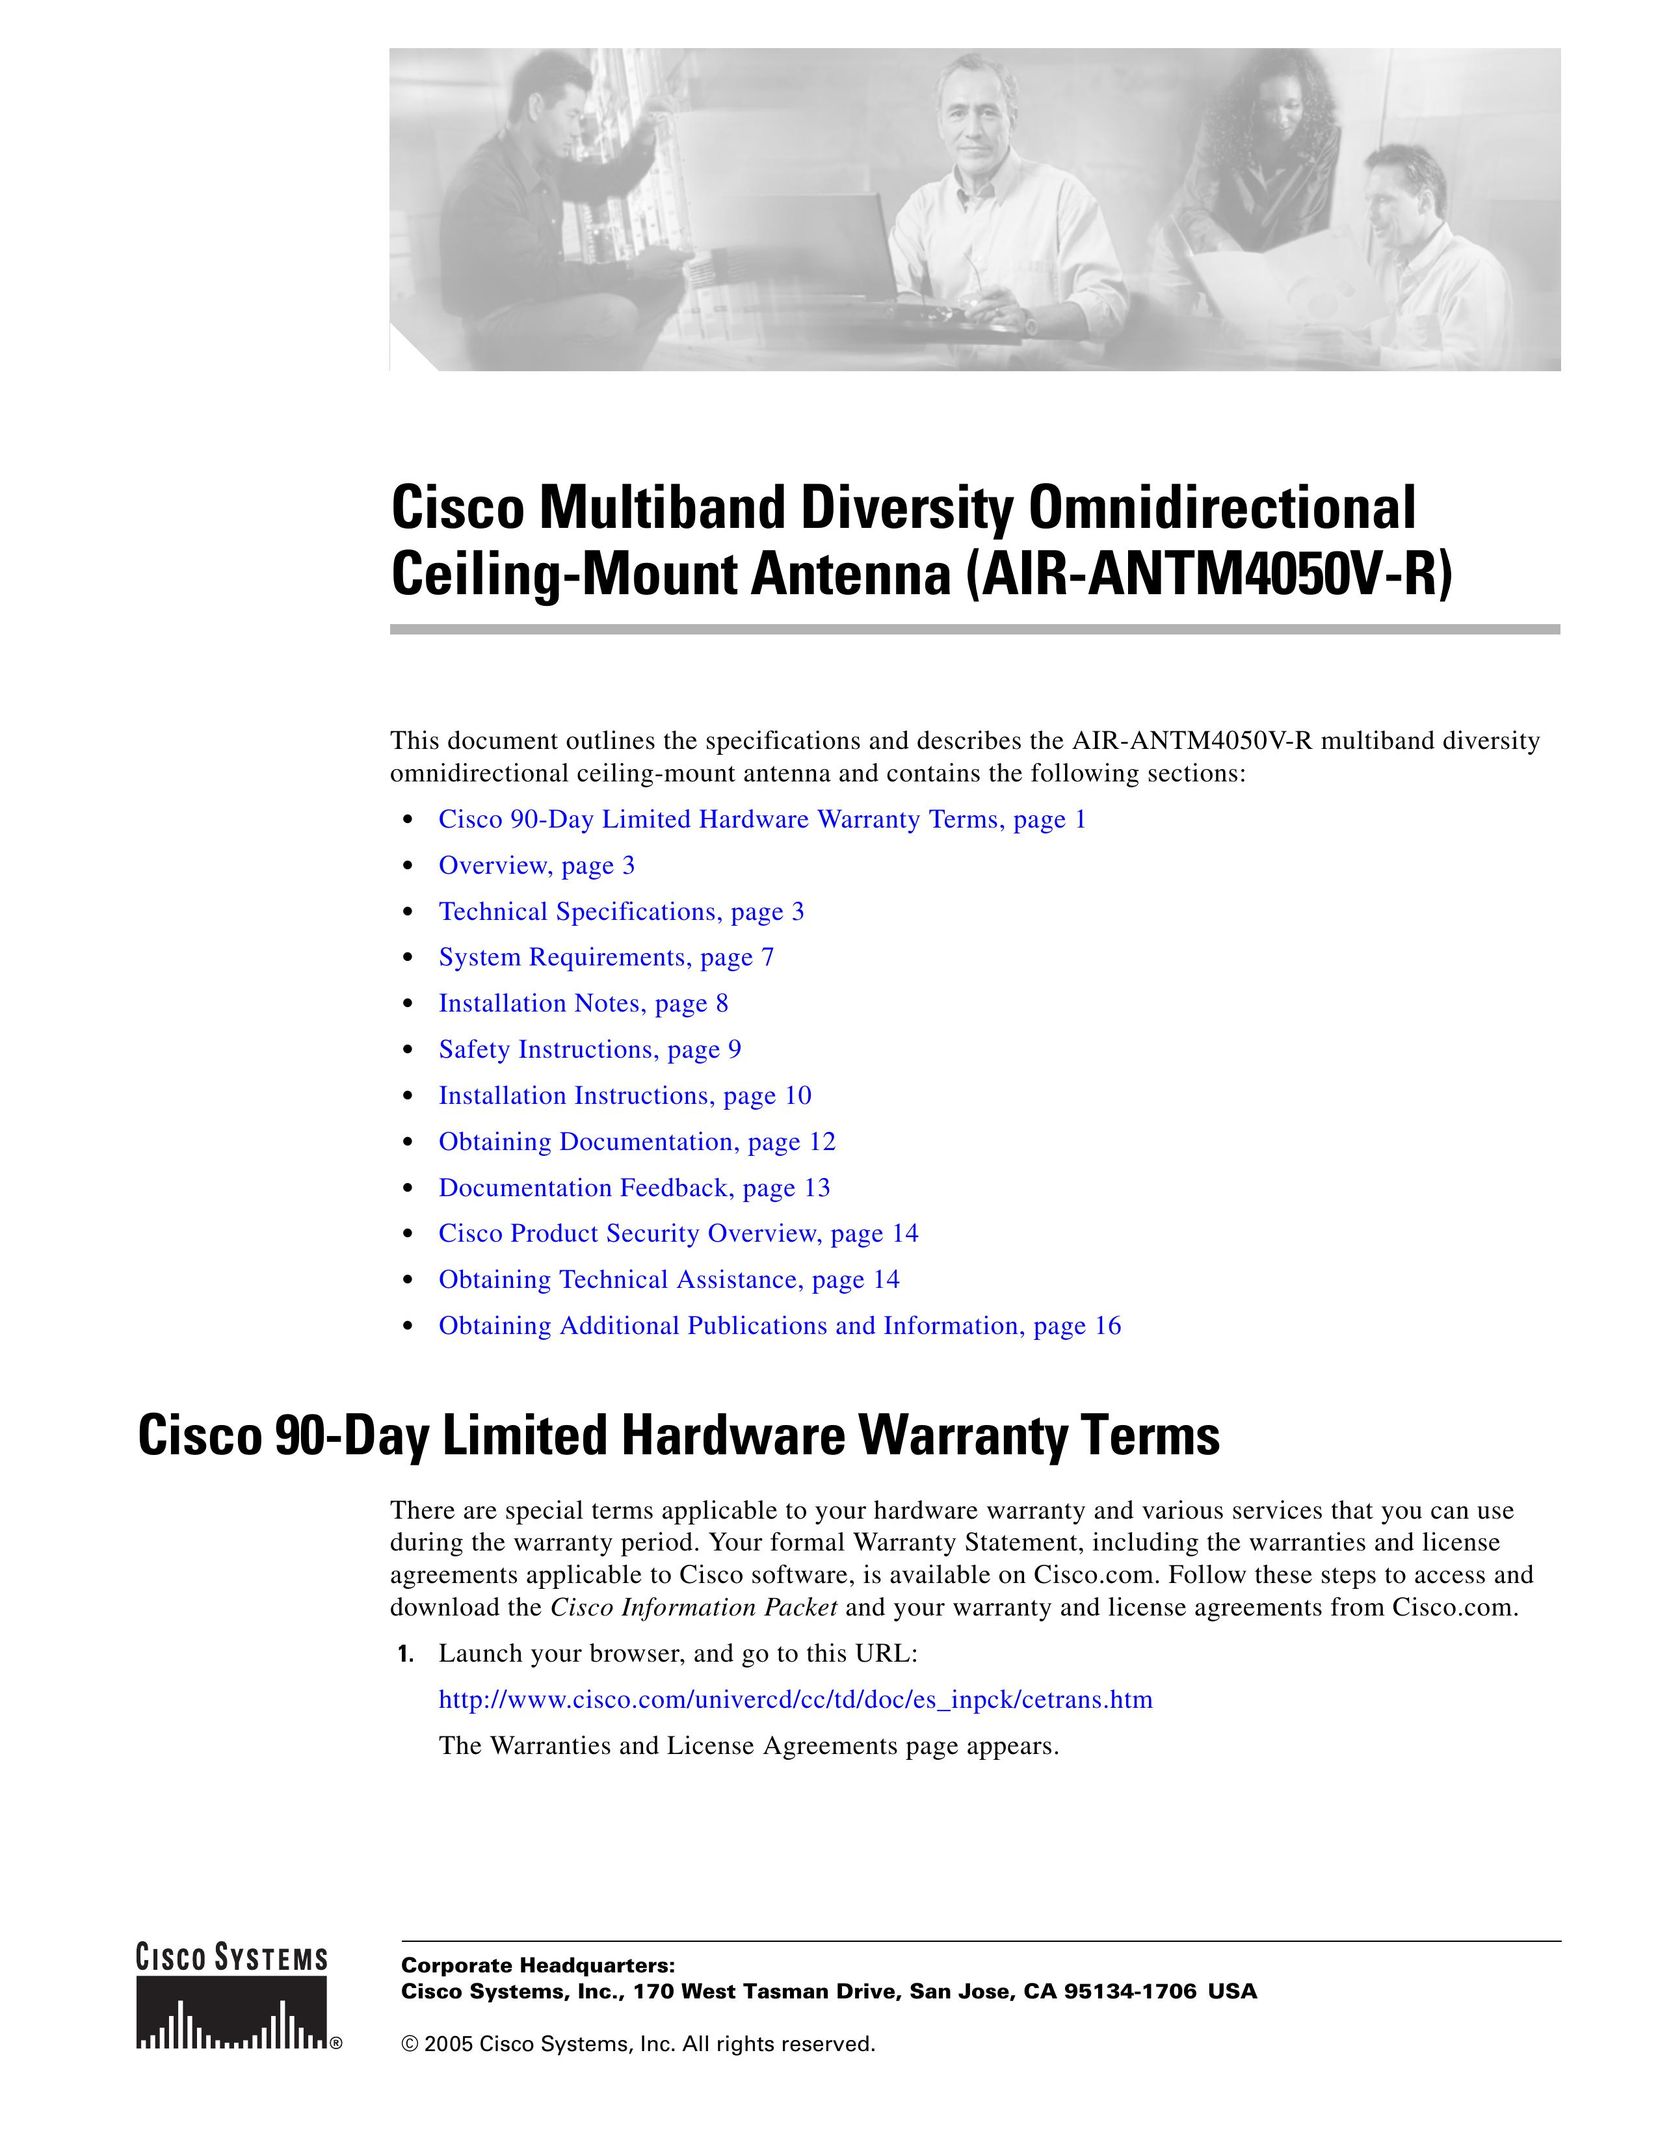 Cisco Systems AIR-ANTM4050V-R Stereo System User Manual